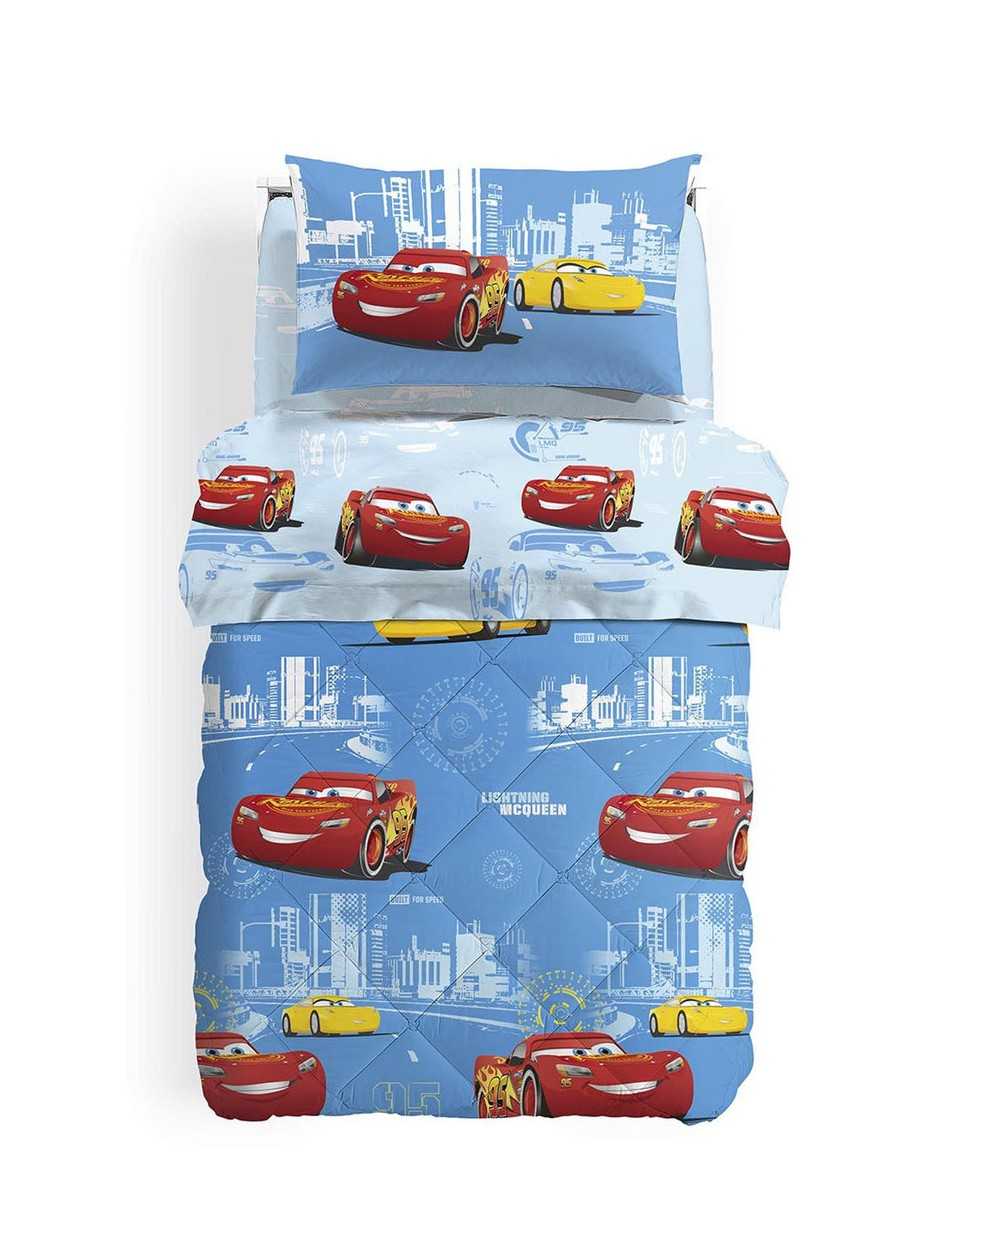 édredon cars 3 Disney Pixar By Caleffi